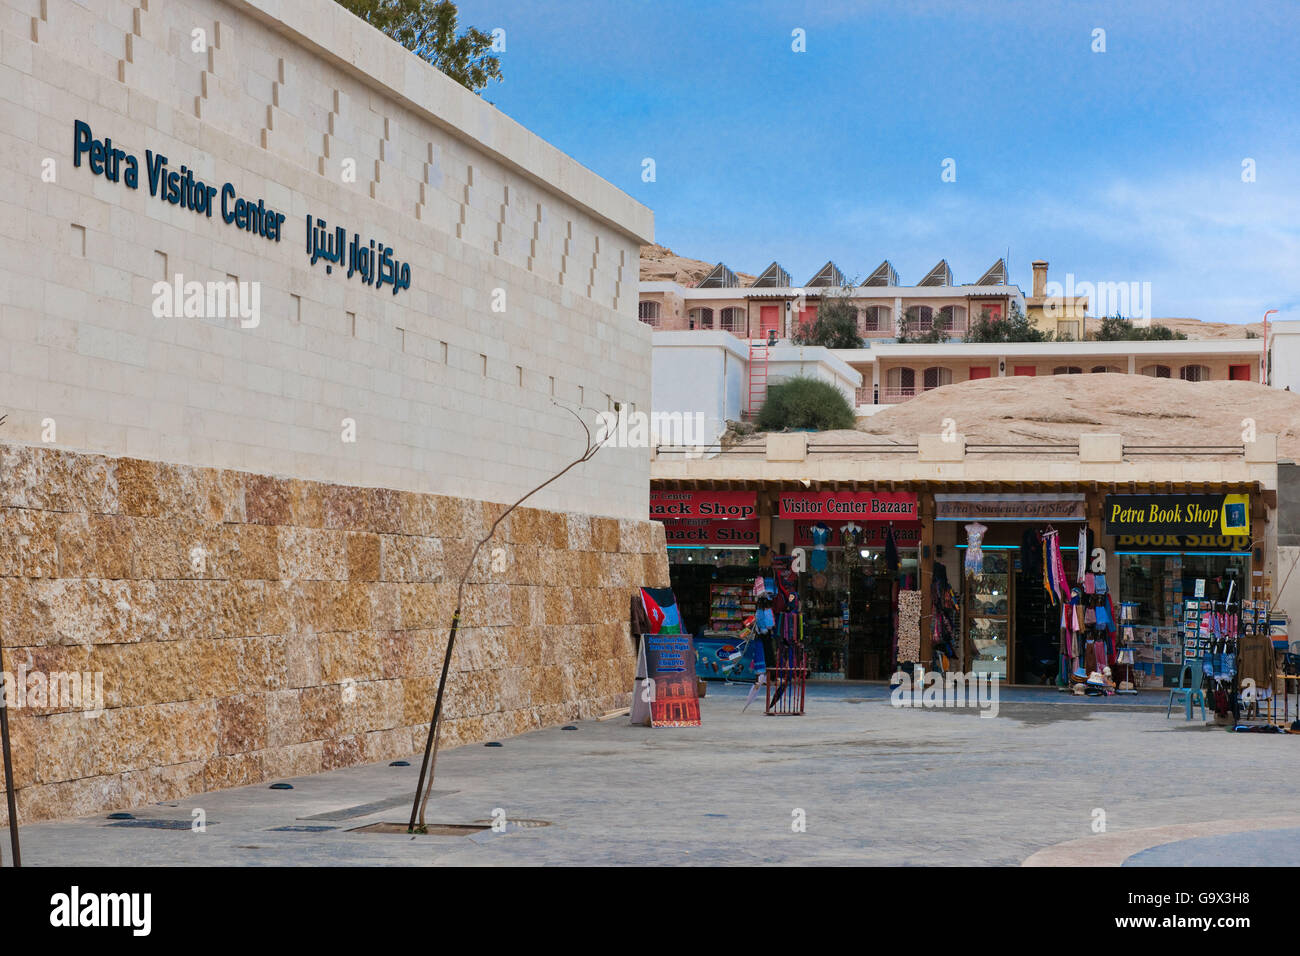 Petra Visitor Center, entrance to Archaeological Park Petra, Petra, Jordan,  Asia Minor Stock Photo - Alamy